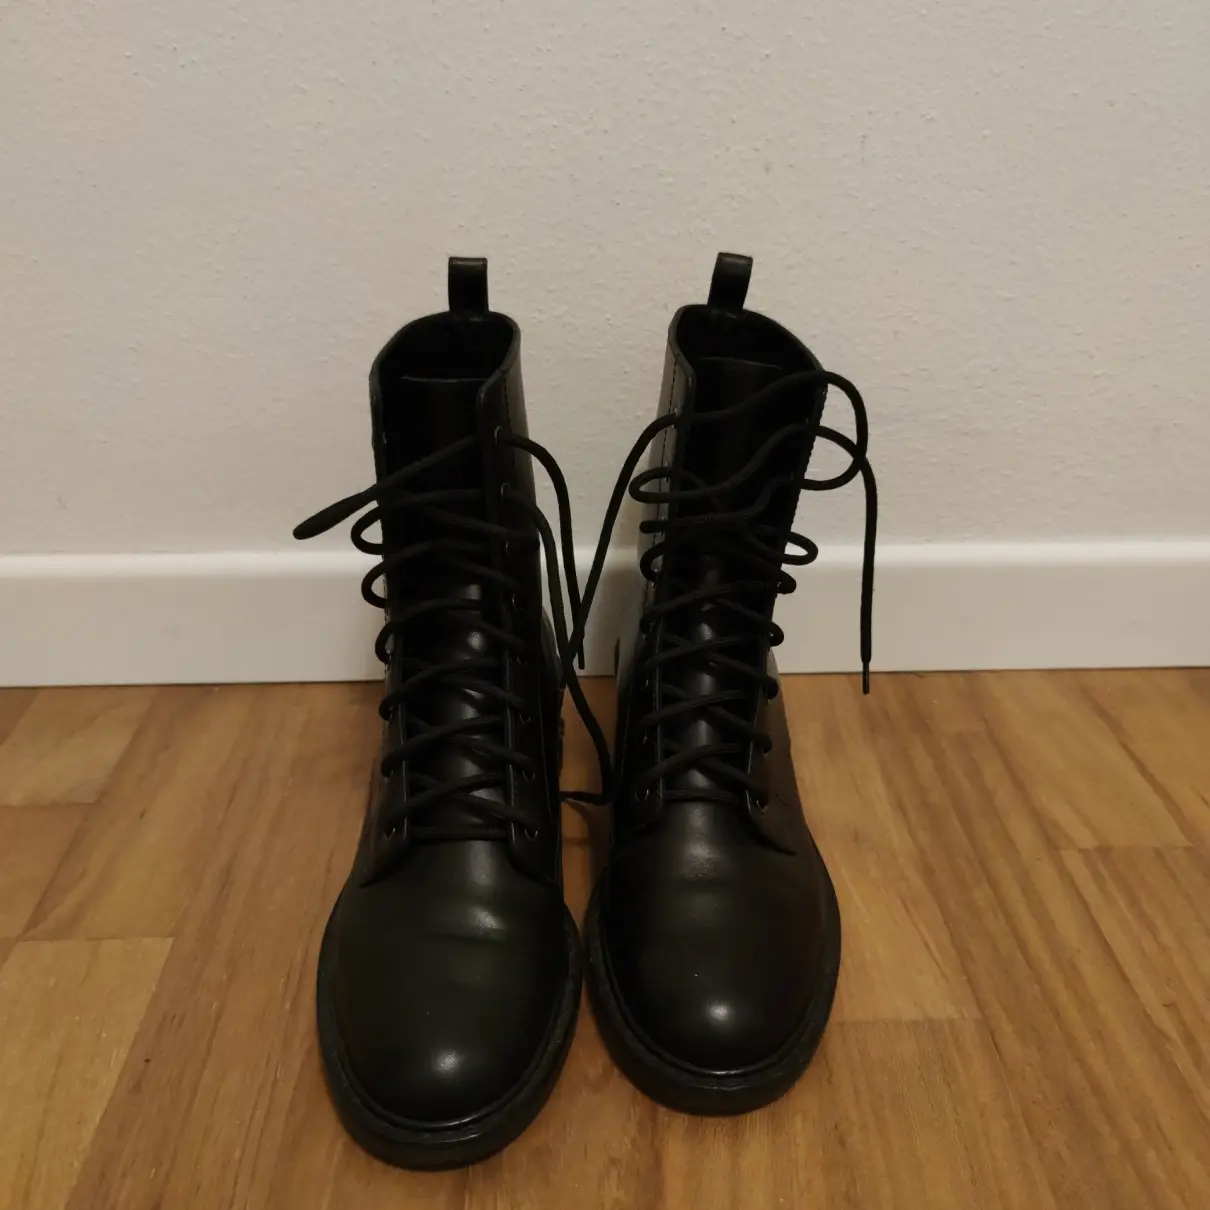 Buy Nicholas Kirkwood Leather lace up boots online